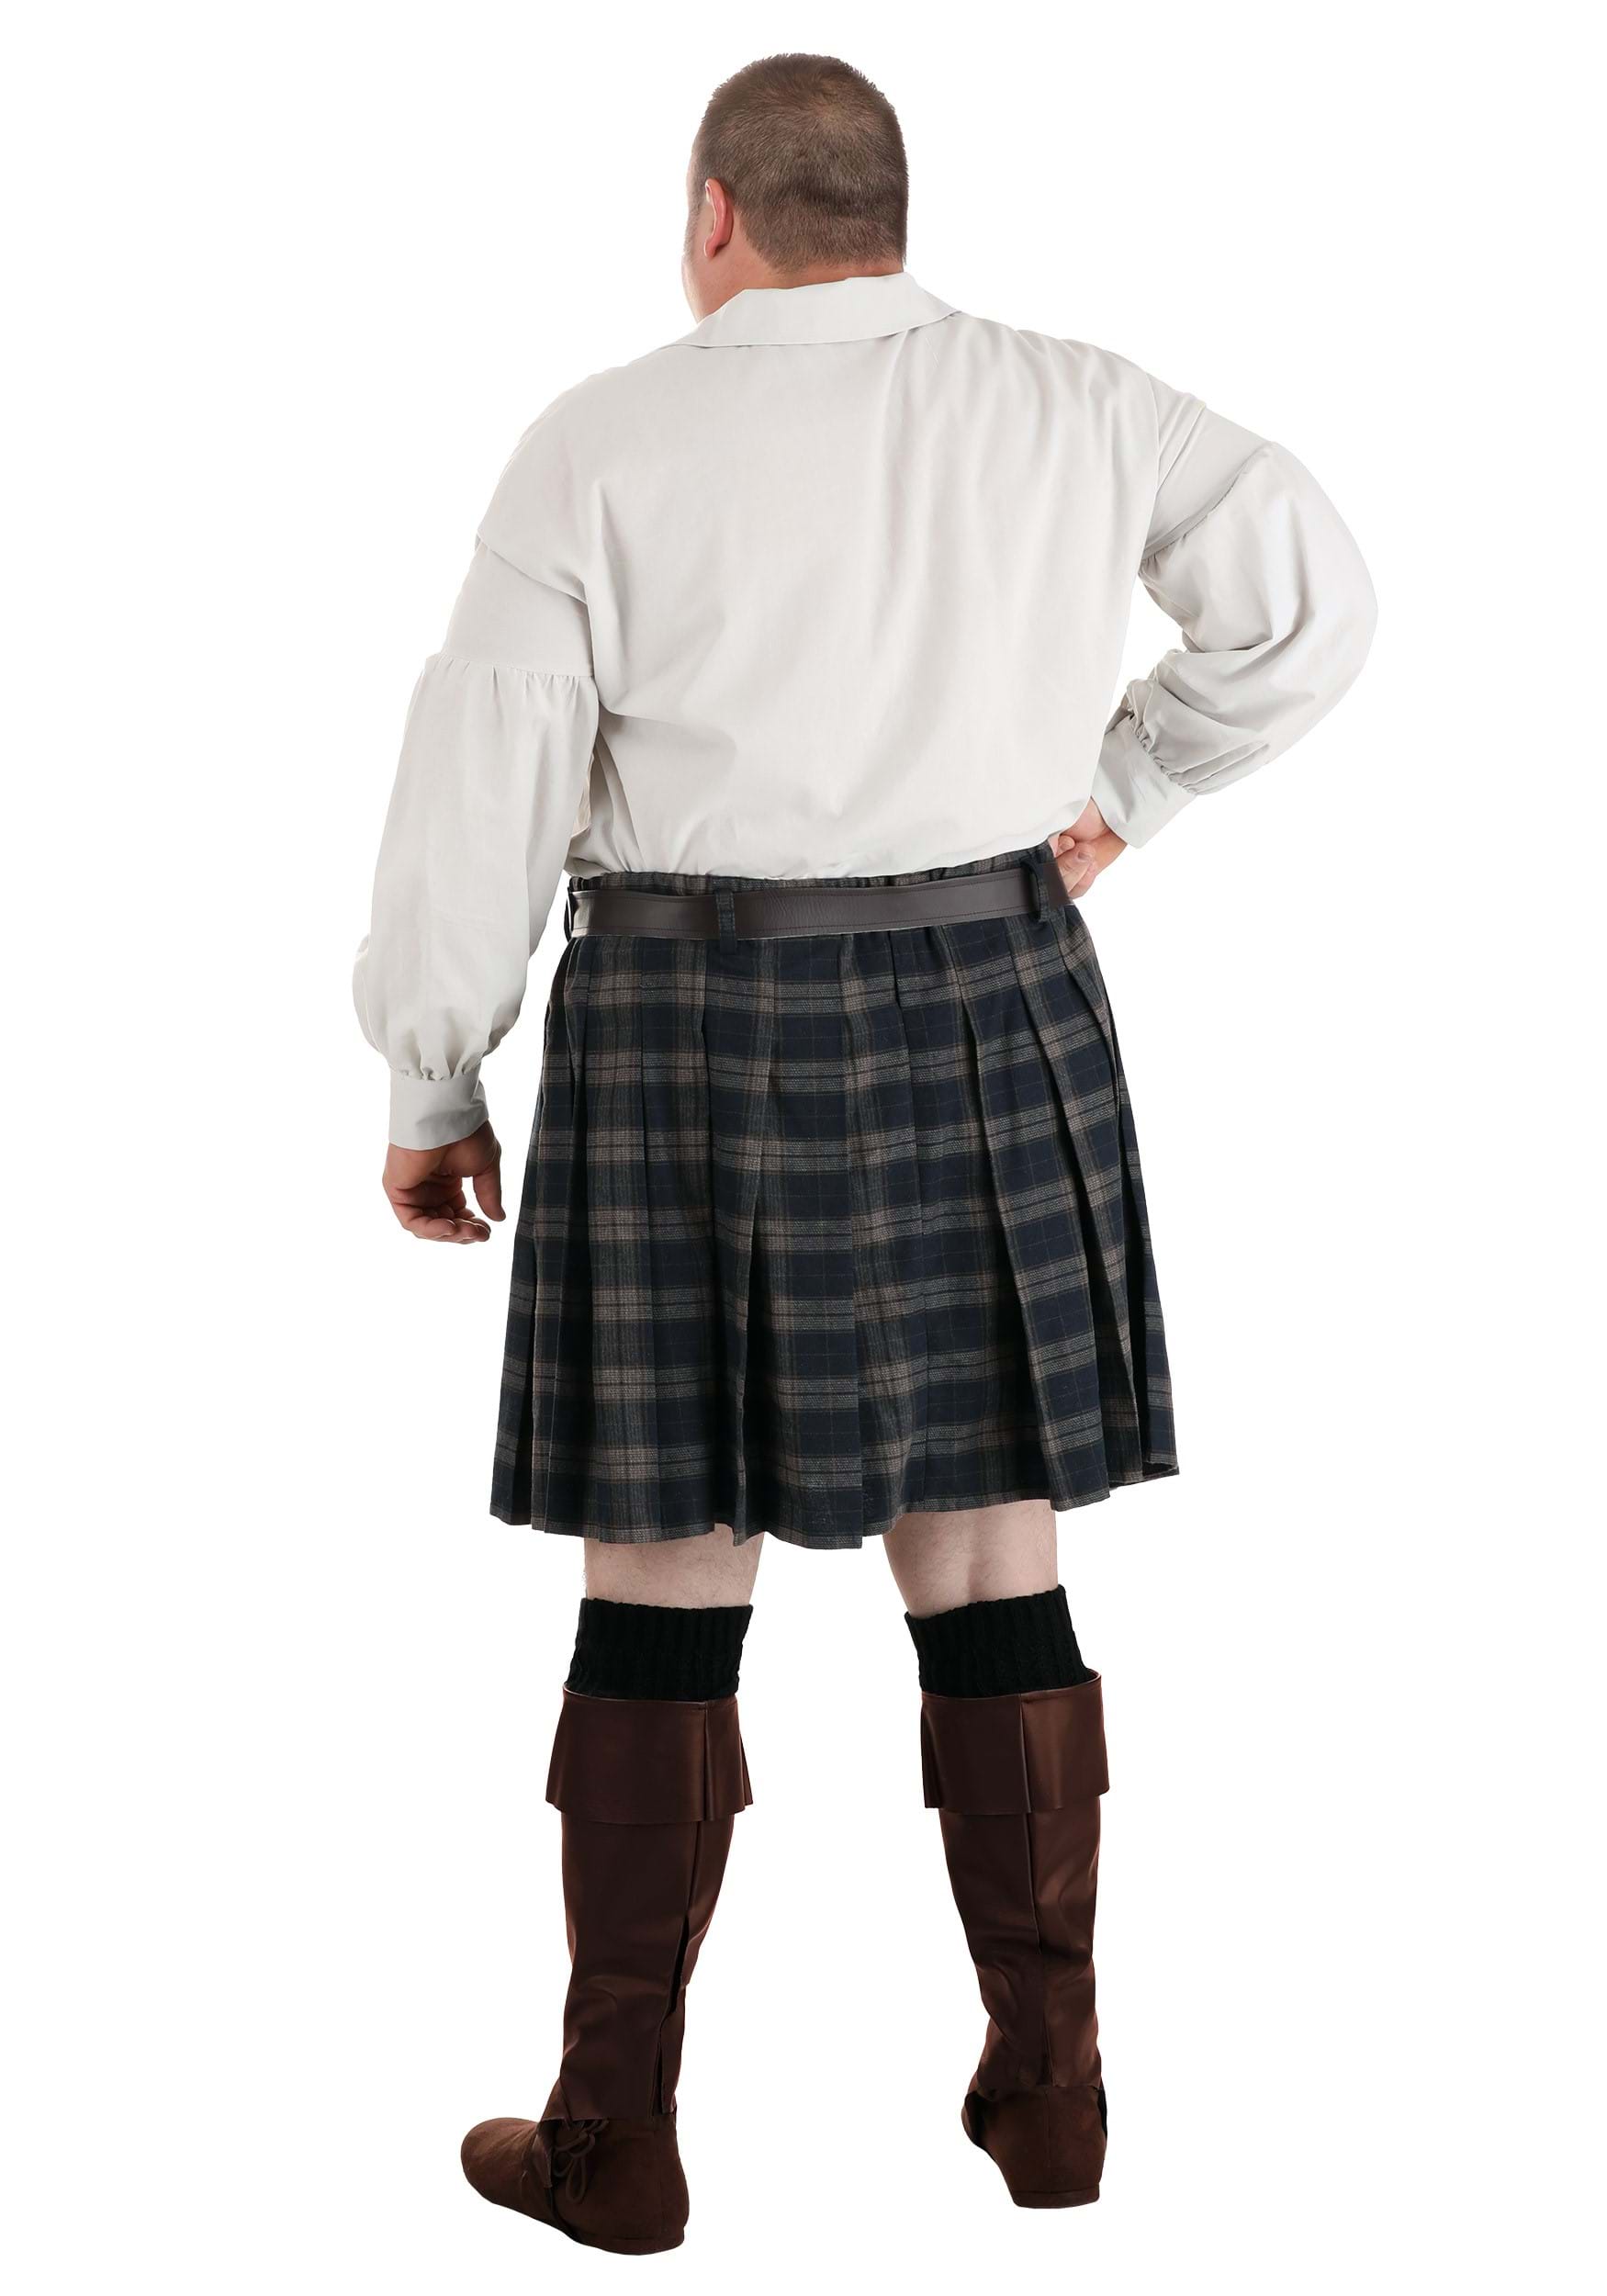 Men's Plus Time Traveling Scottish Highland Costume